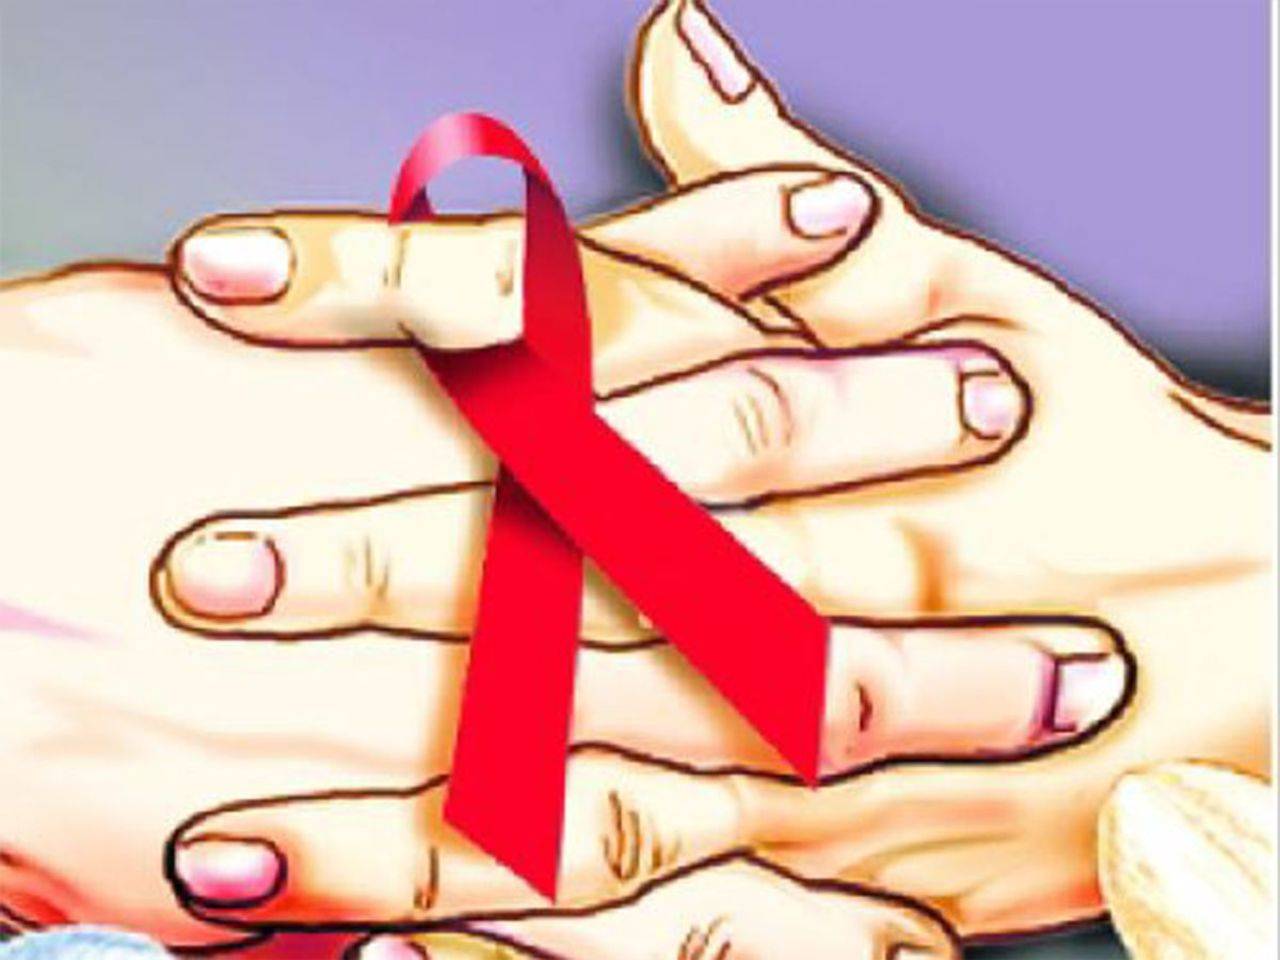 Kerala Pre-marital sex leads to AIDS, says textbook Thiruvananthapuram News